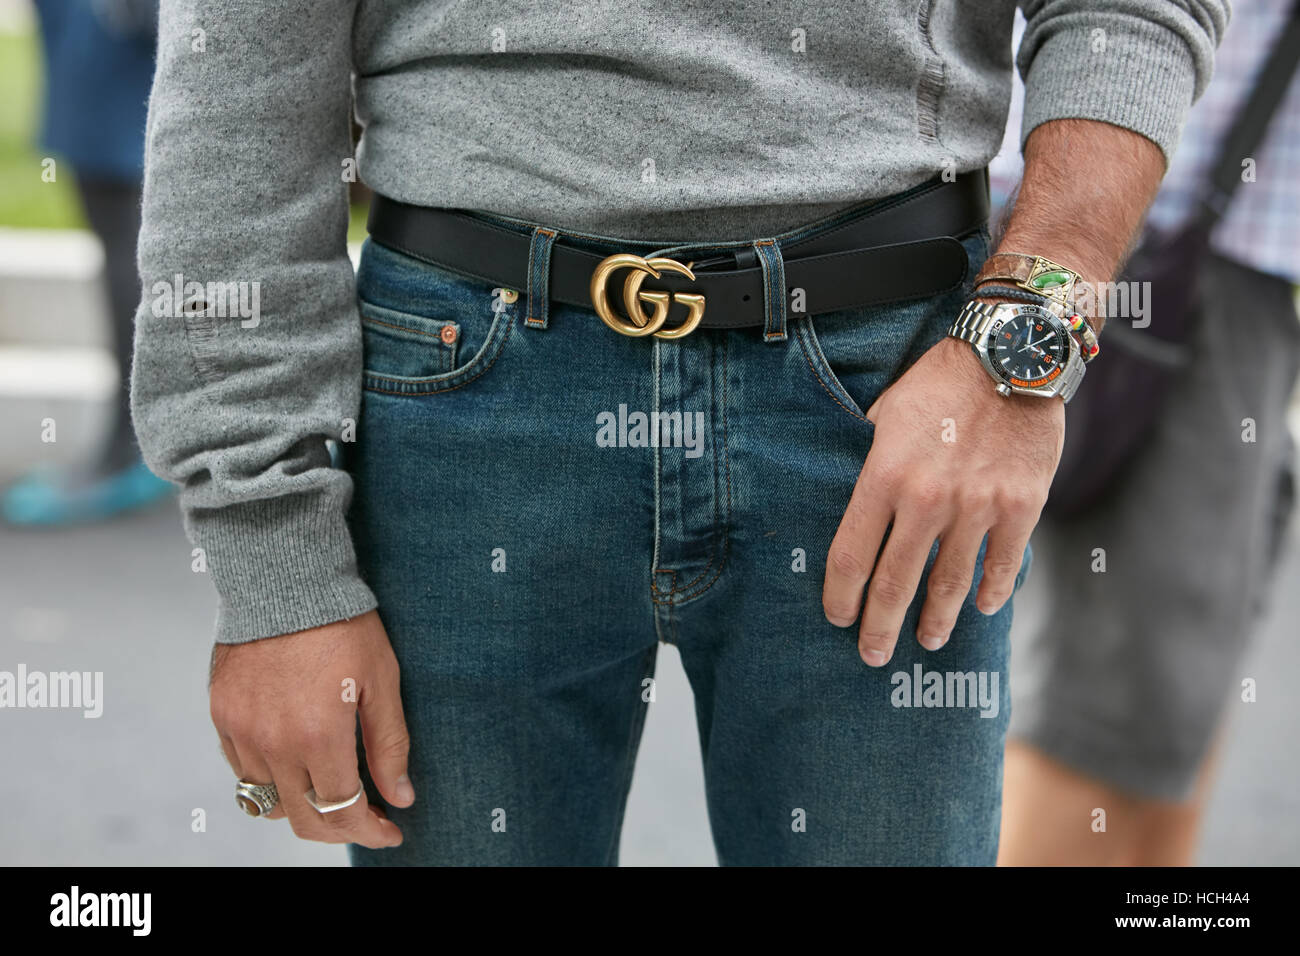 Gucci Belt Stock Photos & Gucci Belt Stock Images - Alamy1300 x 956